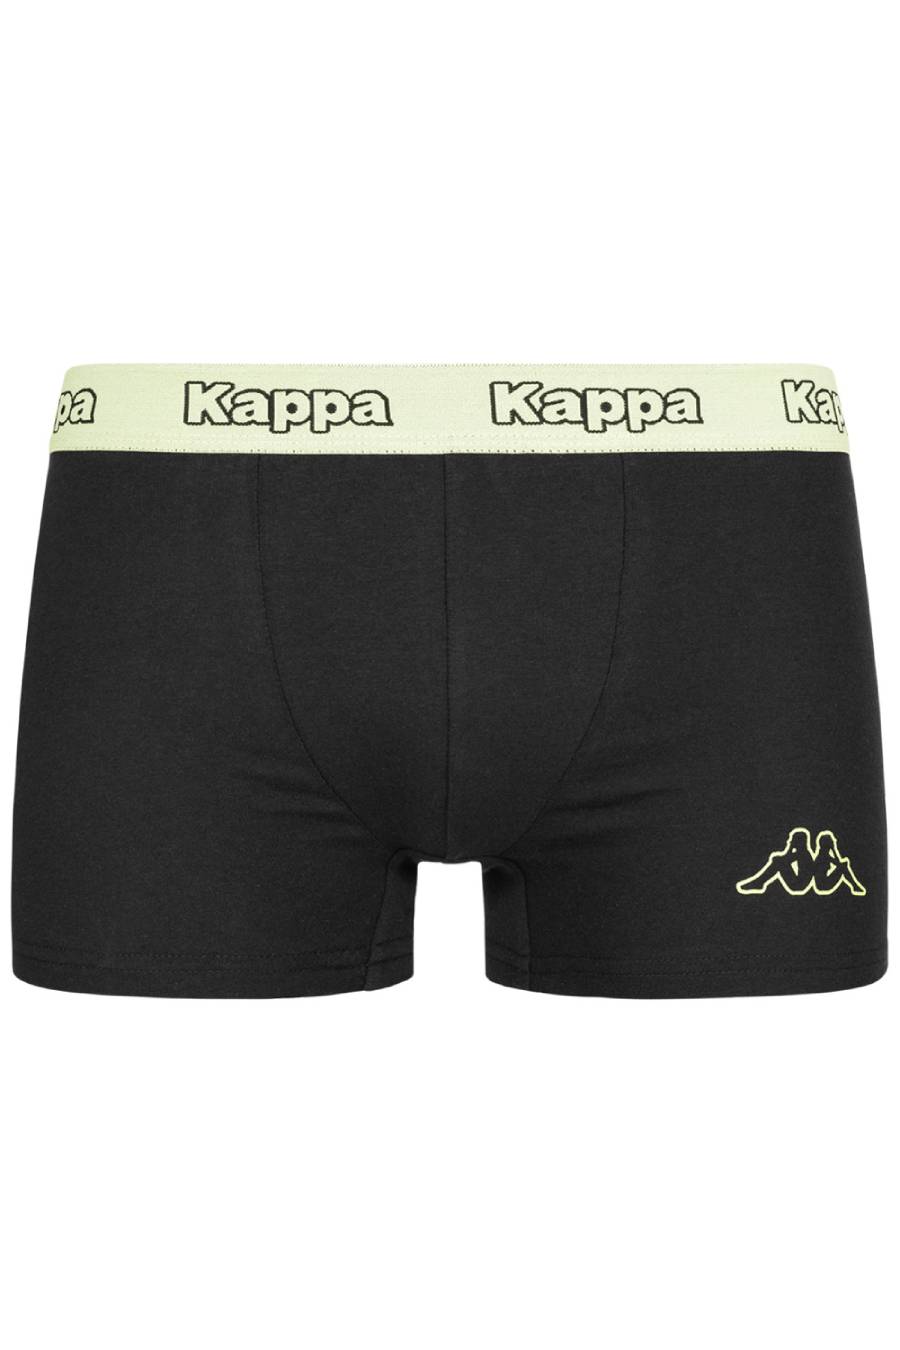 6 x Kappa Trunks Mens Black Boxers Underwear Trunk Boxer Shorts